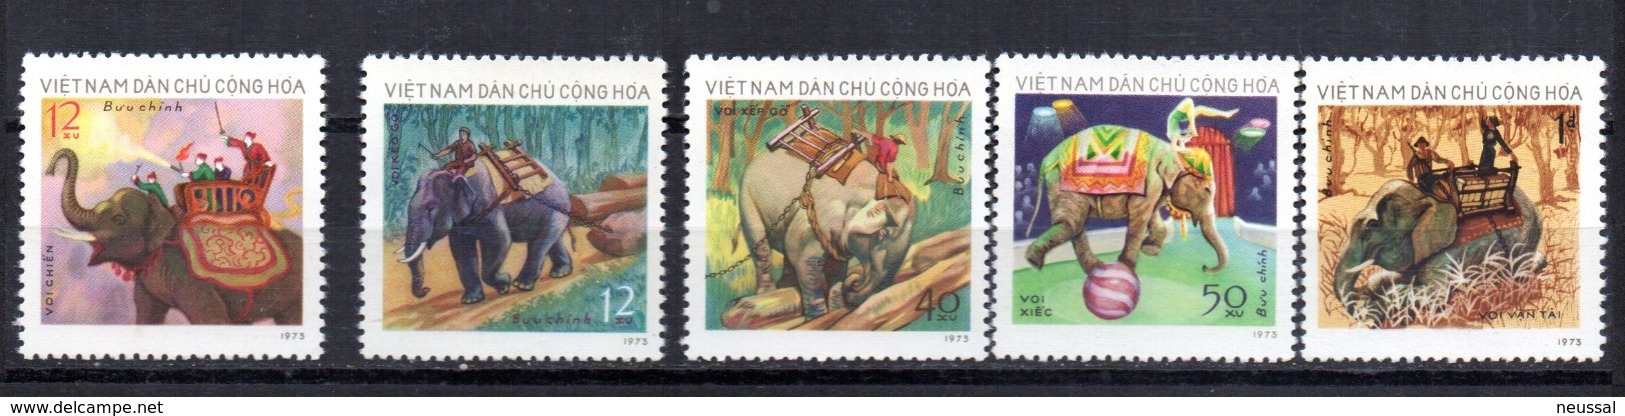 Serie Nº 808/12 Vietnam - Elefantes